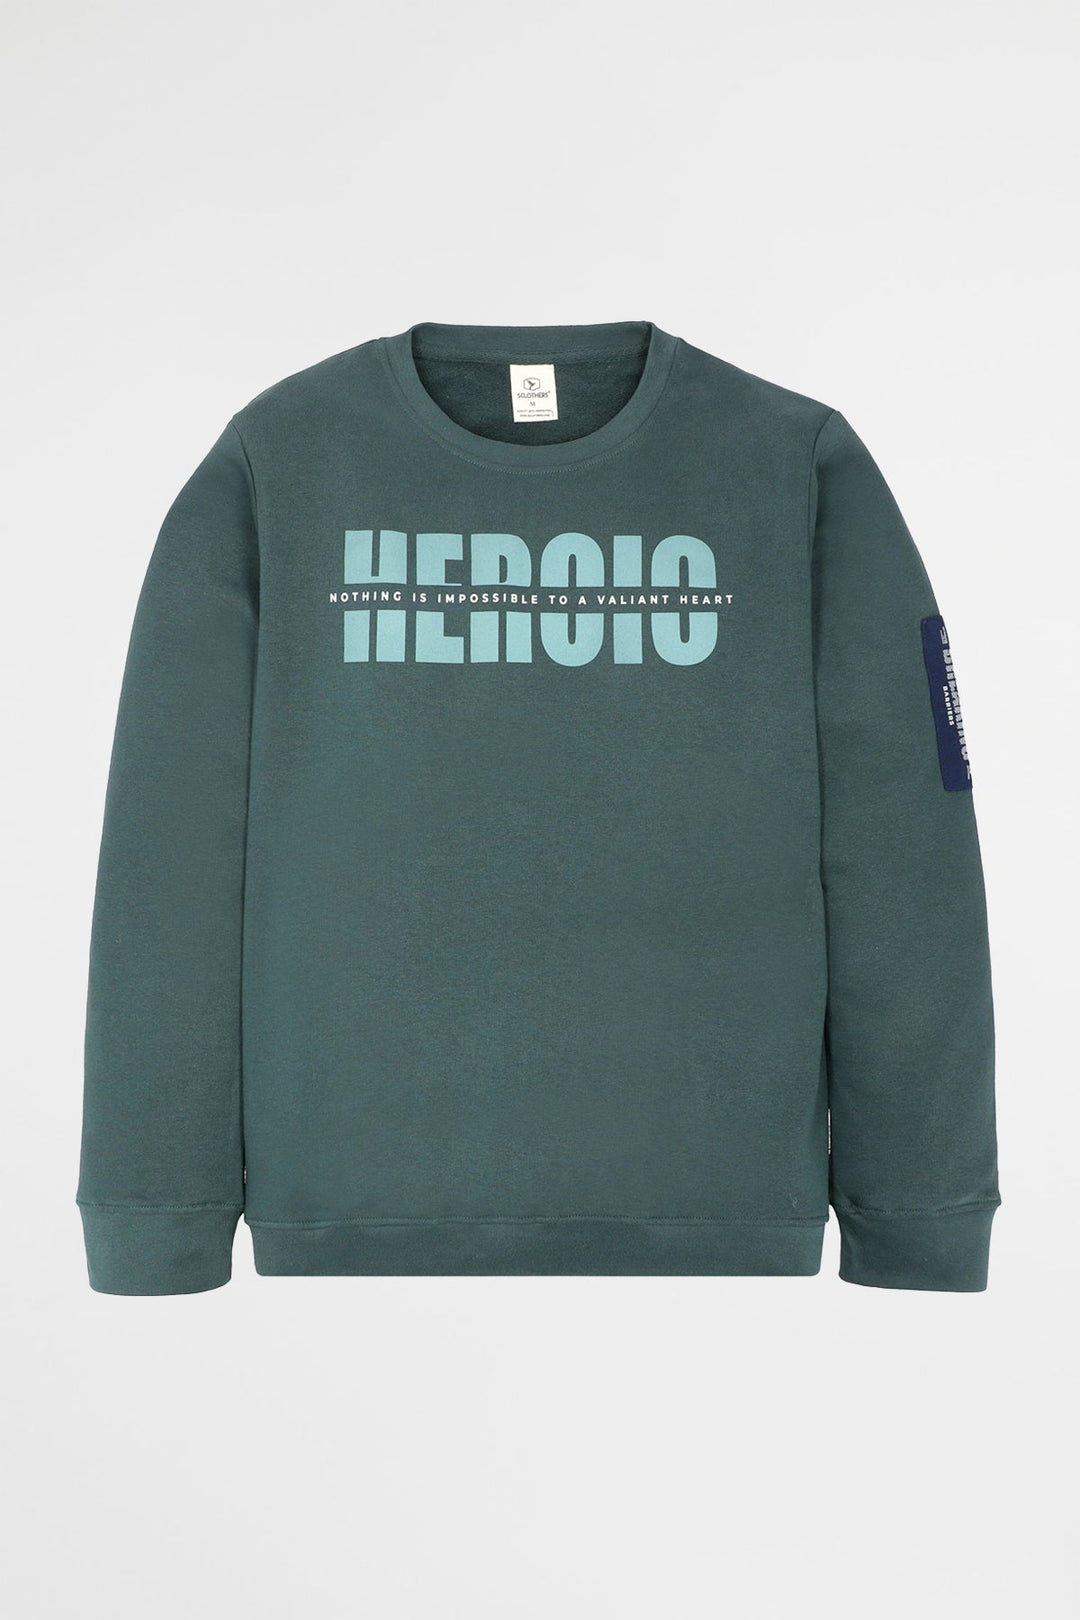 Heroic Teal Sweatshirt (Plus Size) - W22 - MSW049P